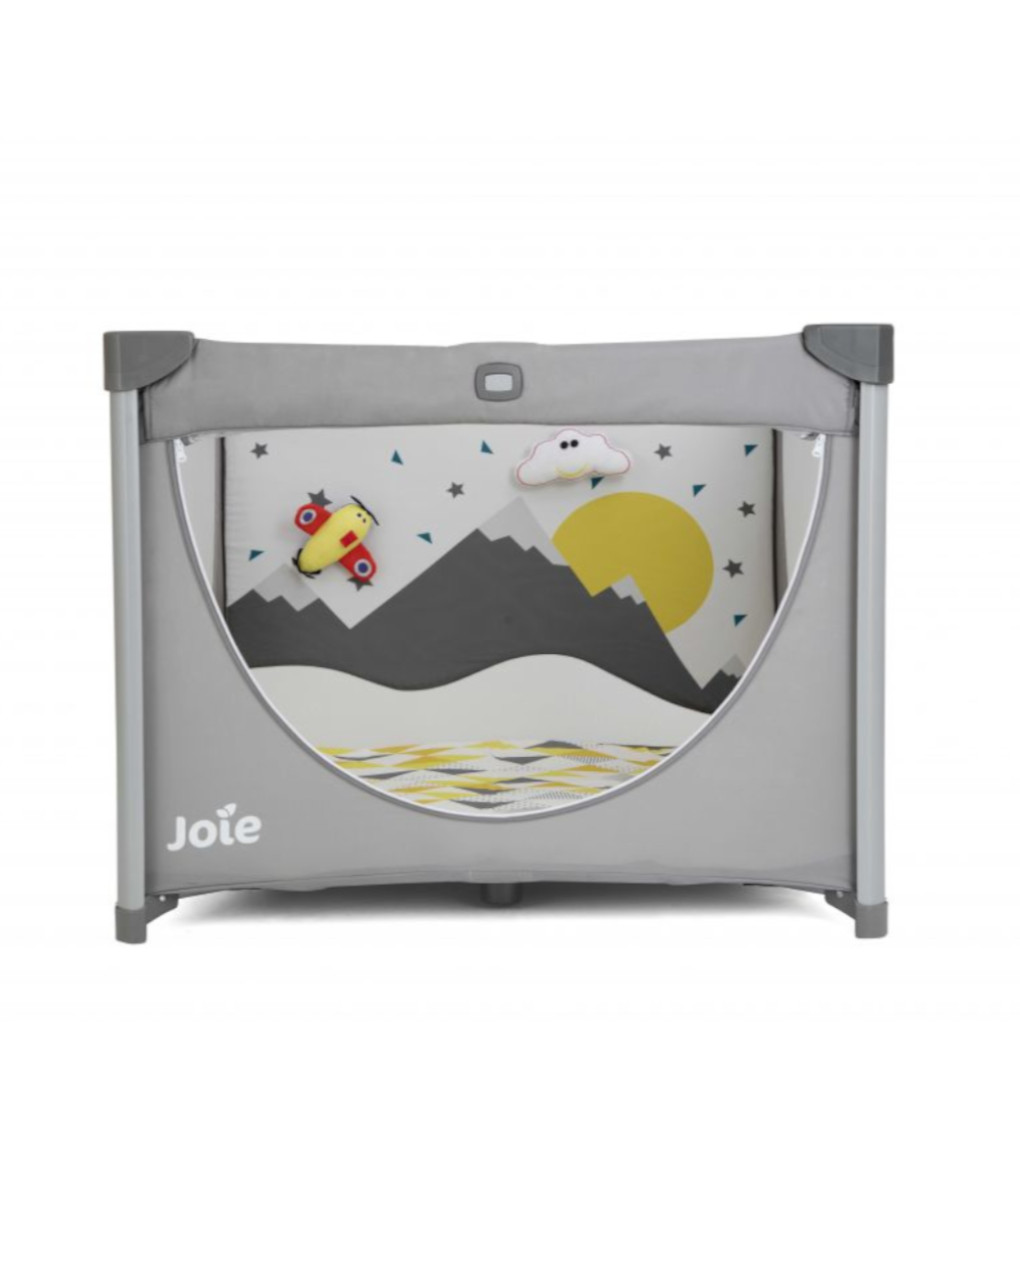 Joie πάρκο με 1 επίπεδο cheer little explorer - Joie